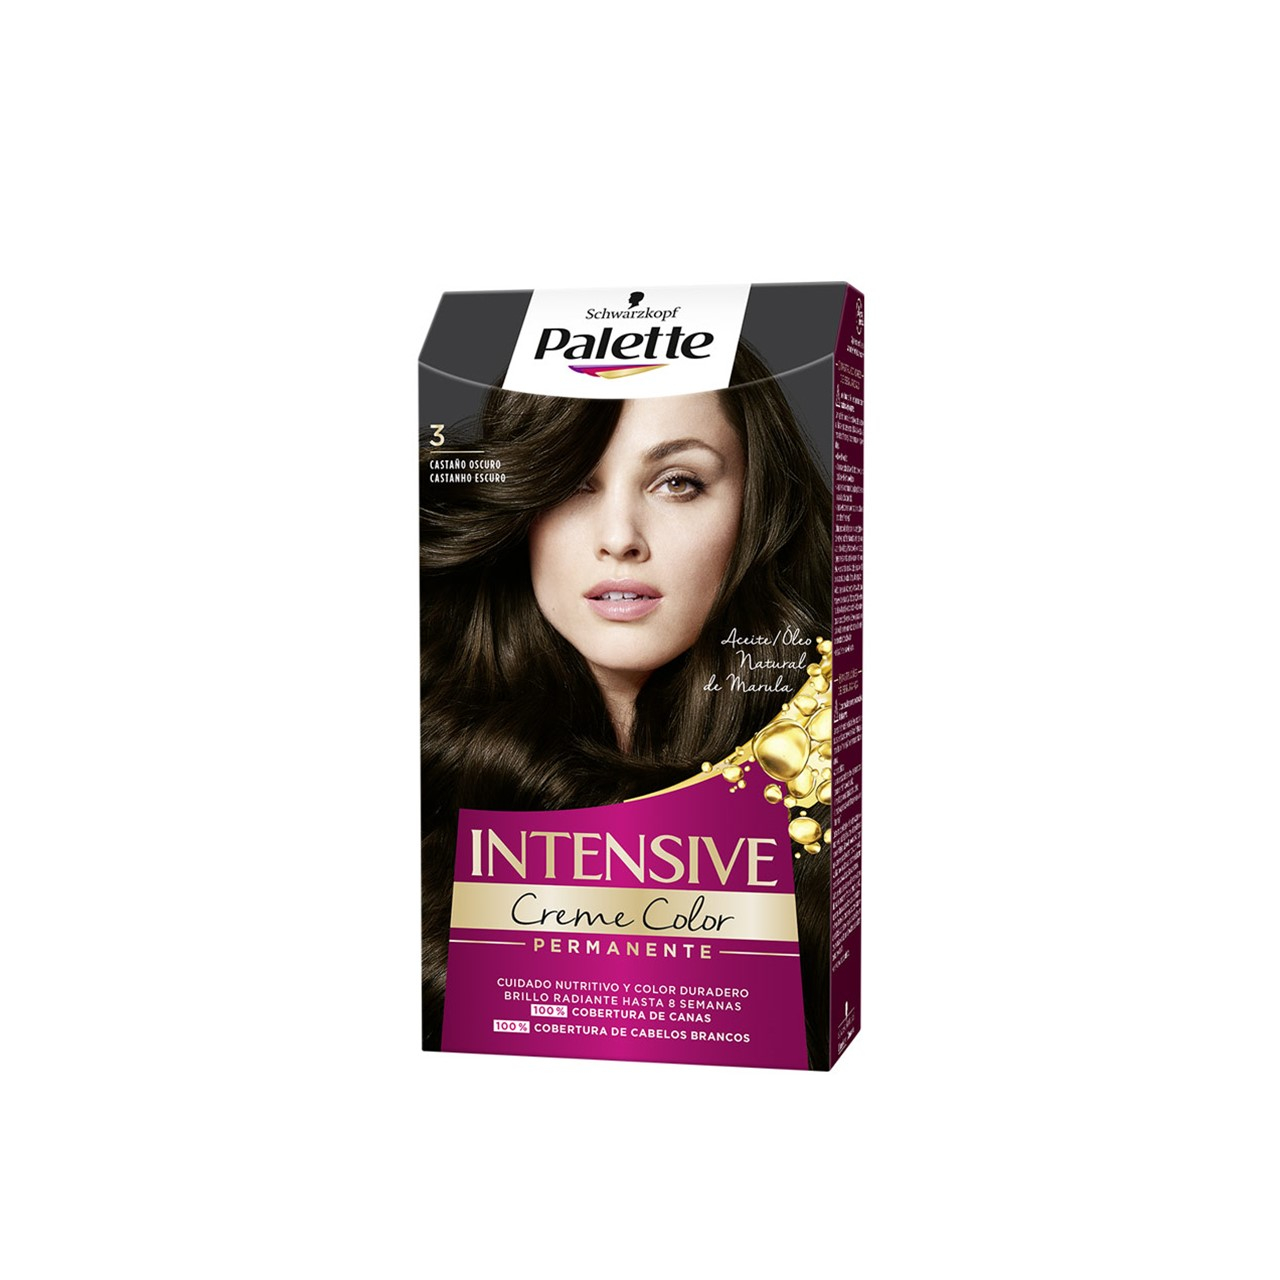 Schwarzkopf Palette Intensive Creme Color Permanent Hair Dye 3 Dark Brown